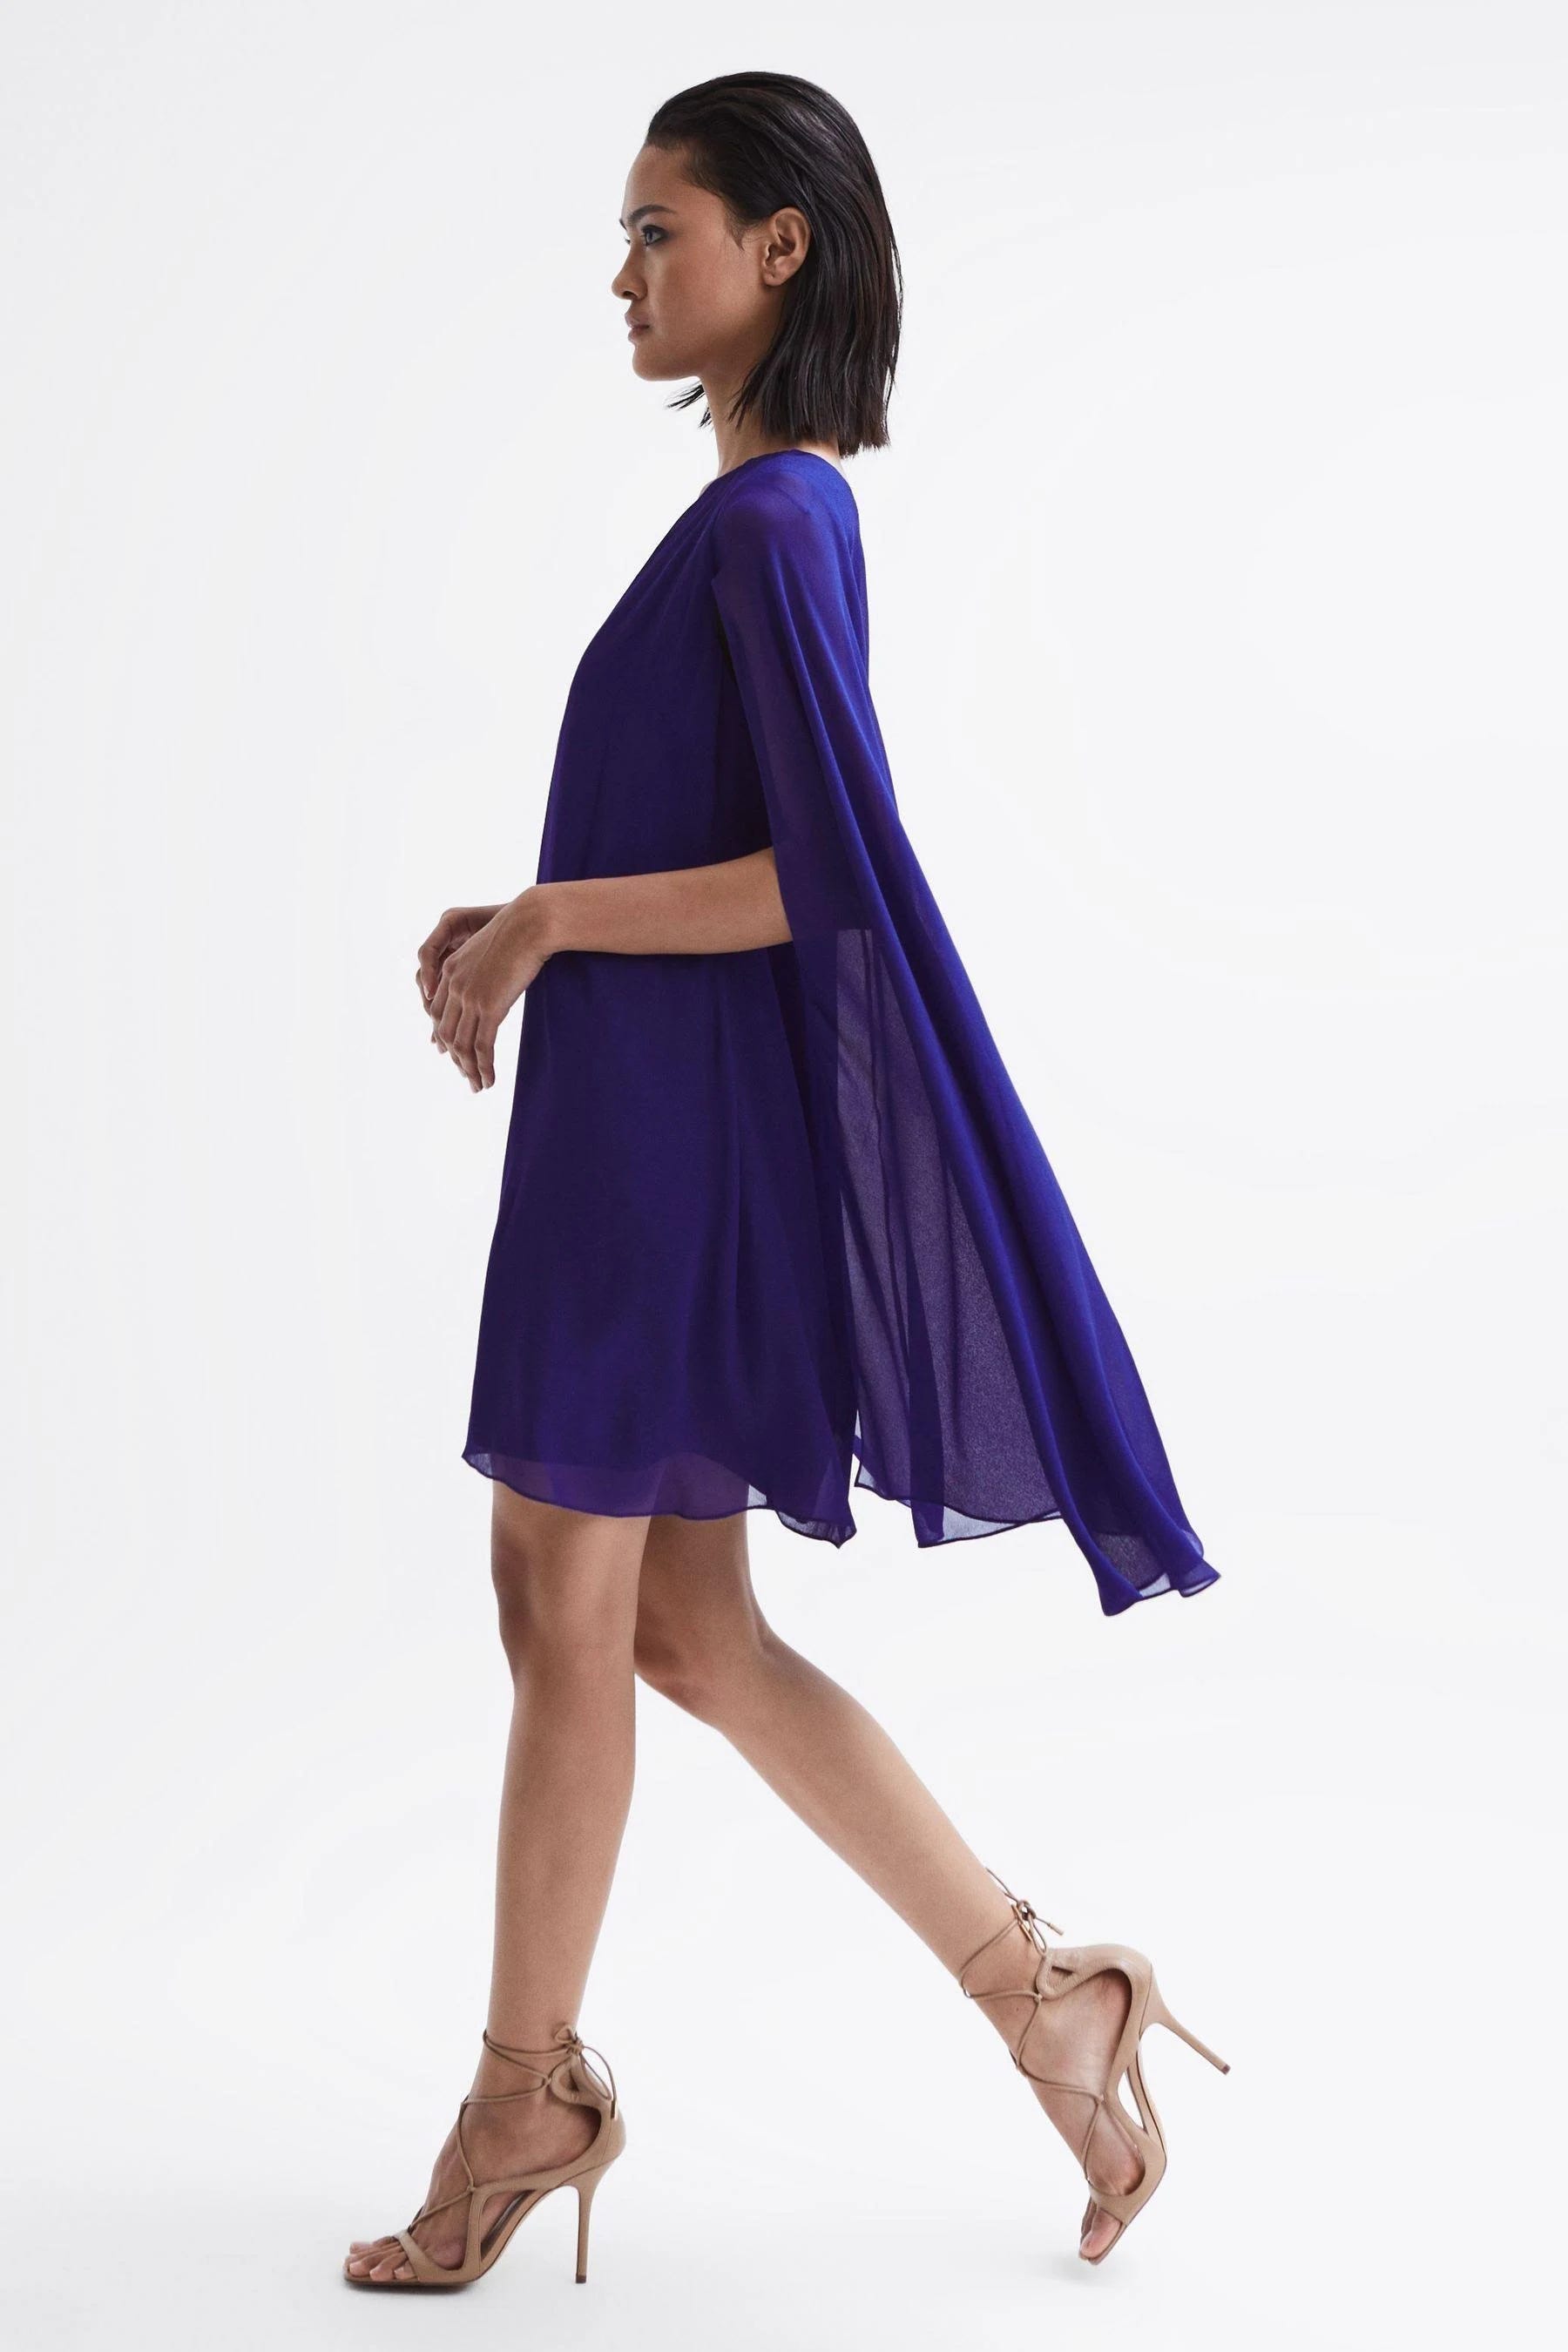 Attractive Purple Cape Sleeve Mini Dress for Elegant Events | Image